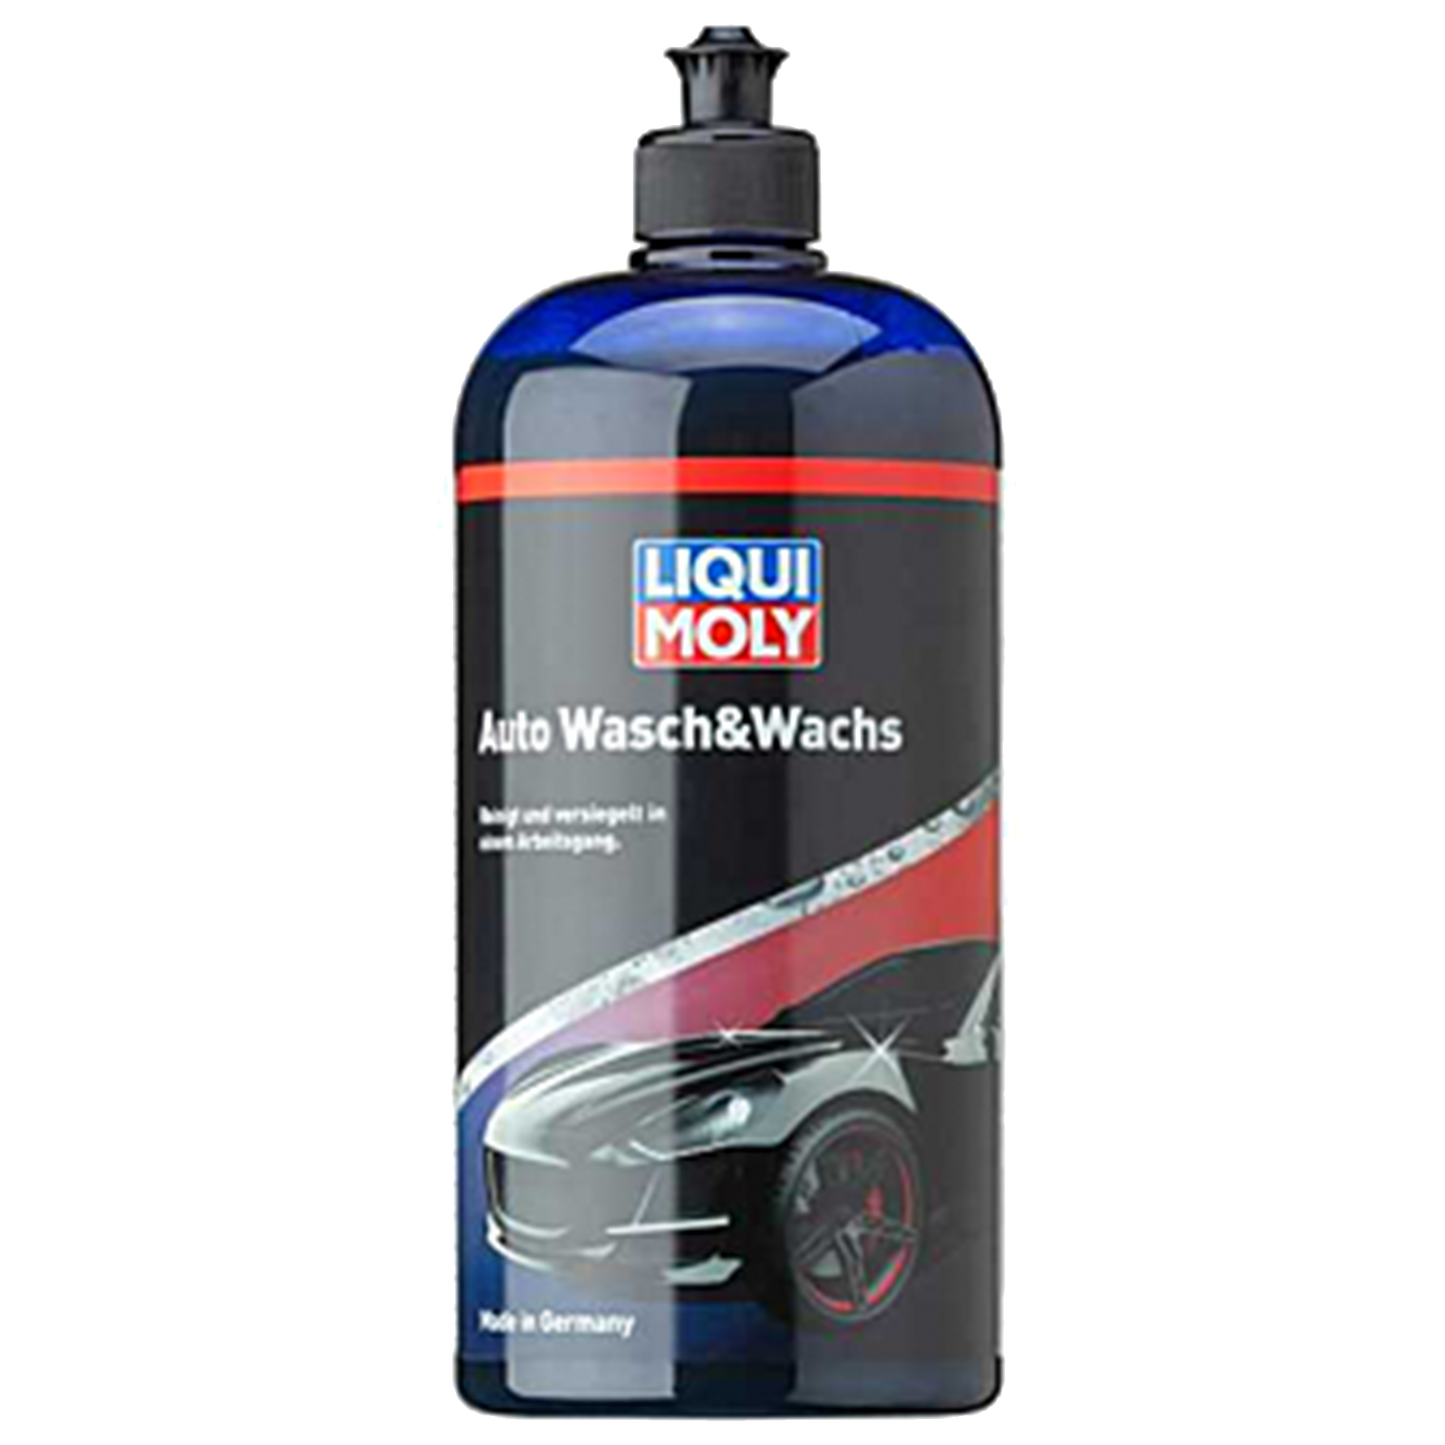 LIQUI MOLY Auto Wasch&Wachs - 1l